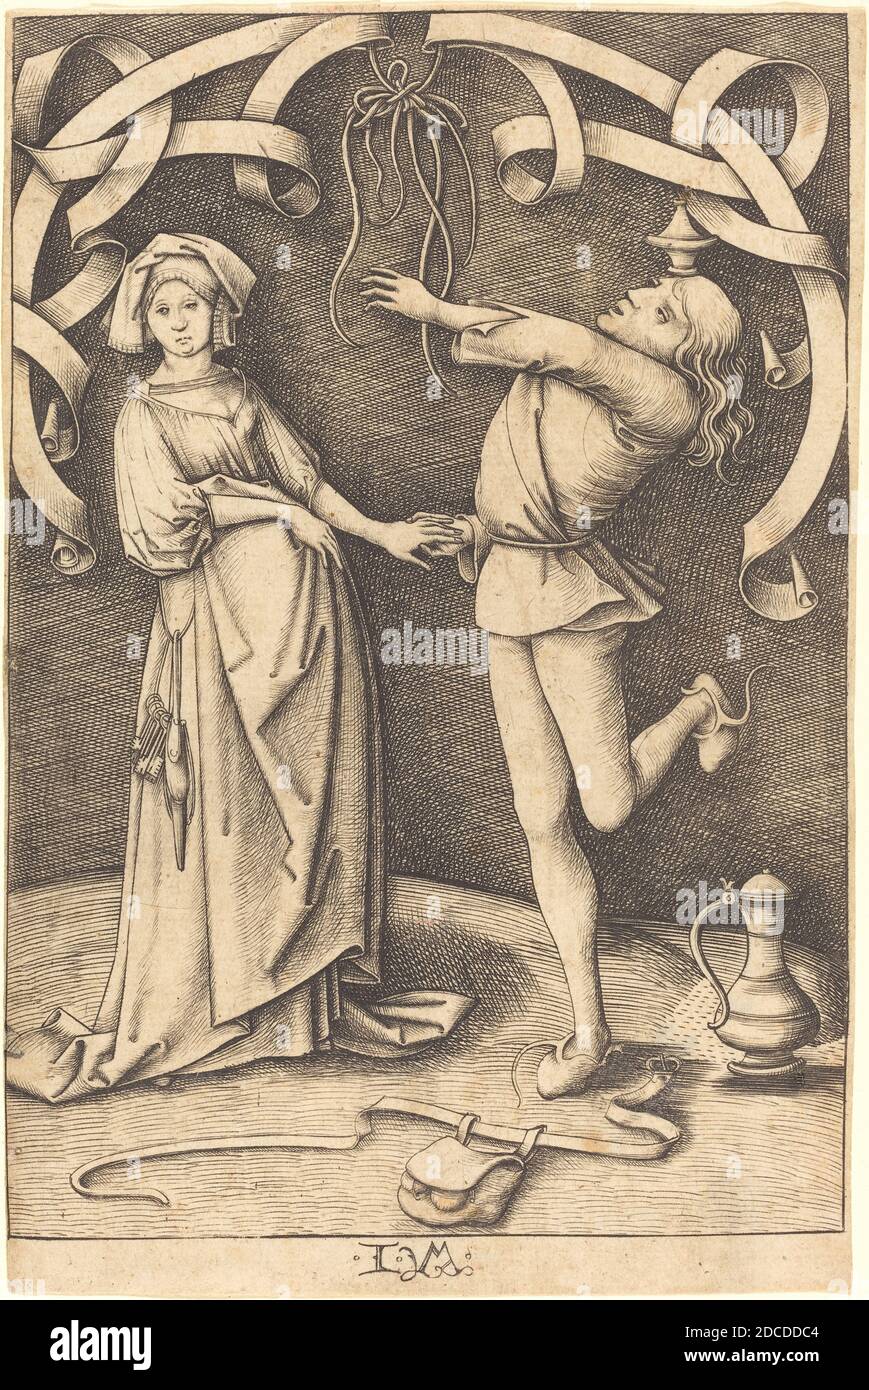 Israhel van Meckenem, (artist), German, c. 1445 - 1503, The Juggler and the Woman, Scenes of Daily Life, (series), c. 1495/1503, engraving Stock Photo